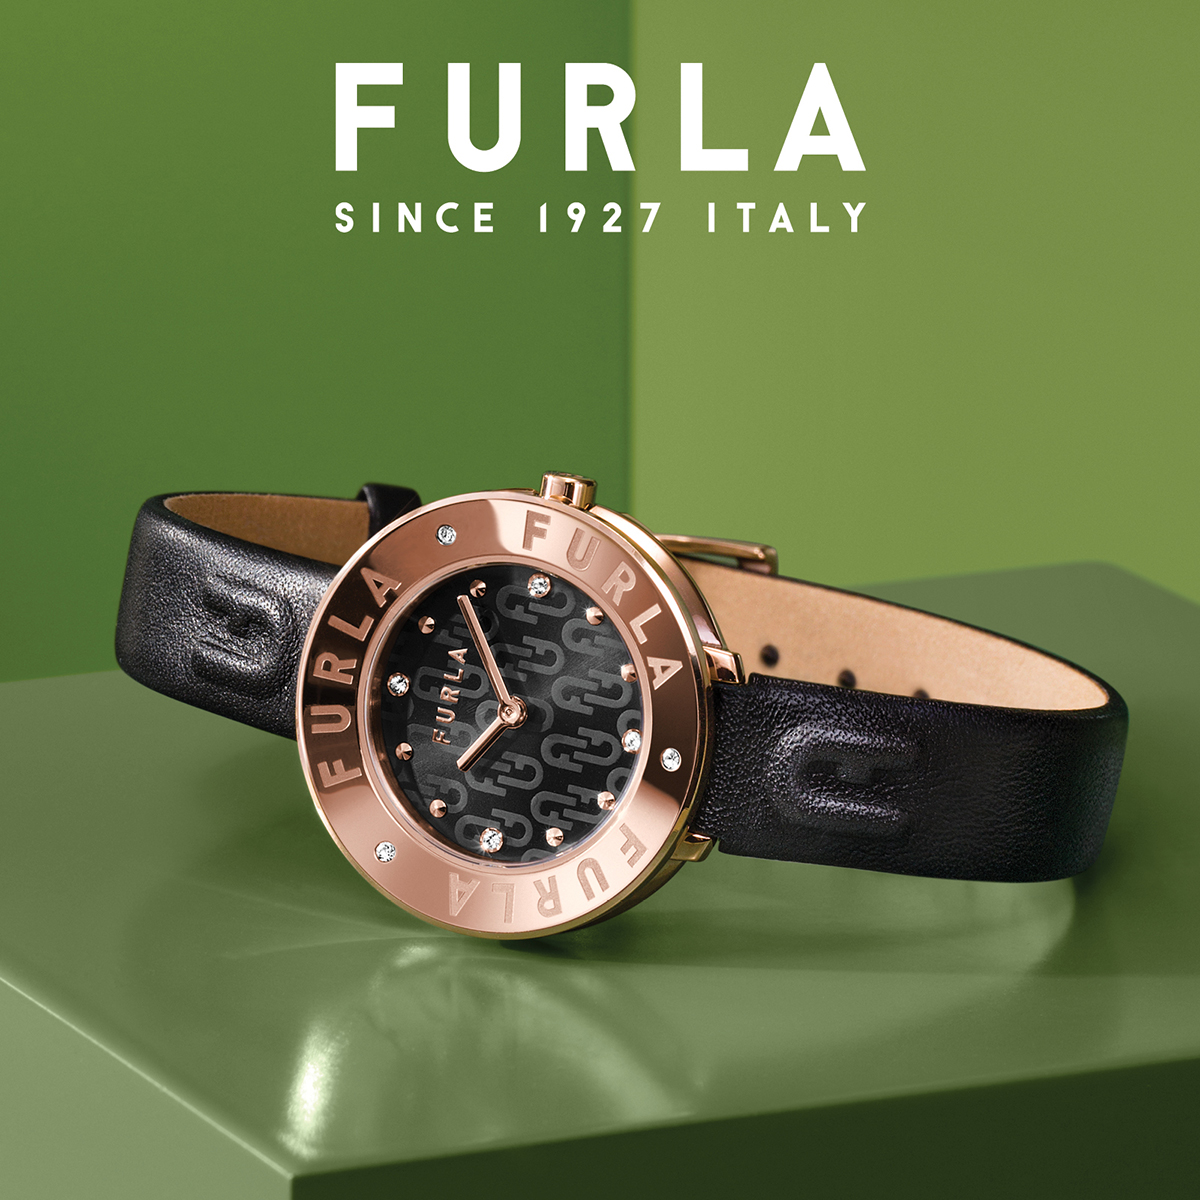 FURLA/フルラ FURLA ESSENTIAL 腕時計 FL-WW00004015L1 レディース-